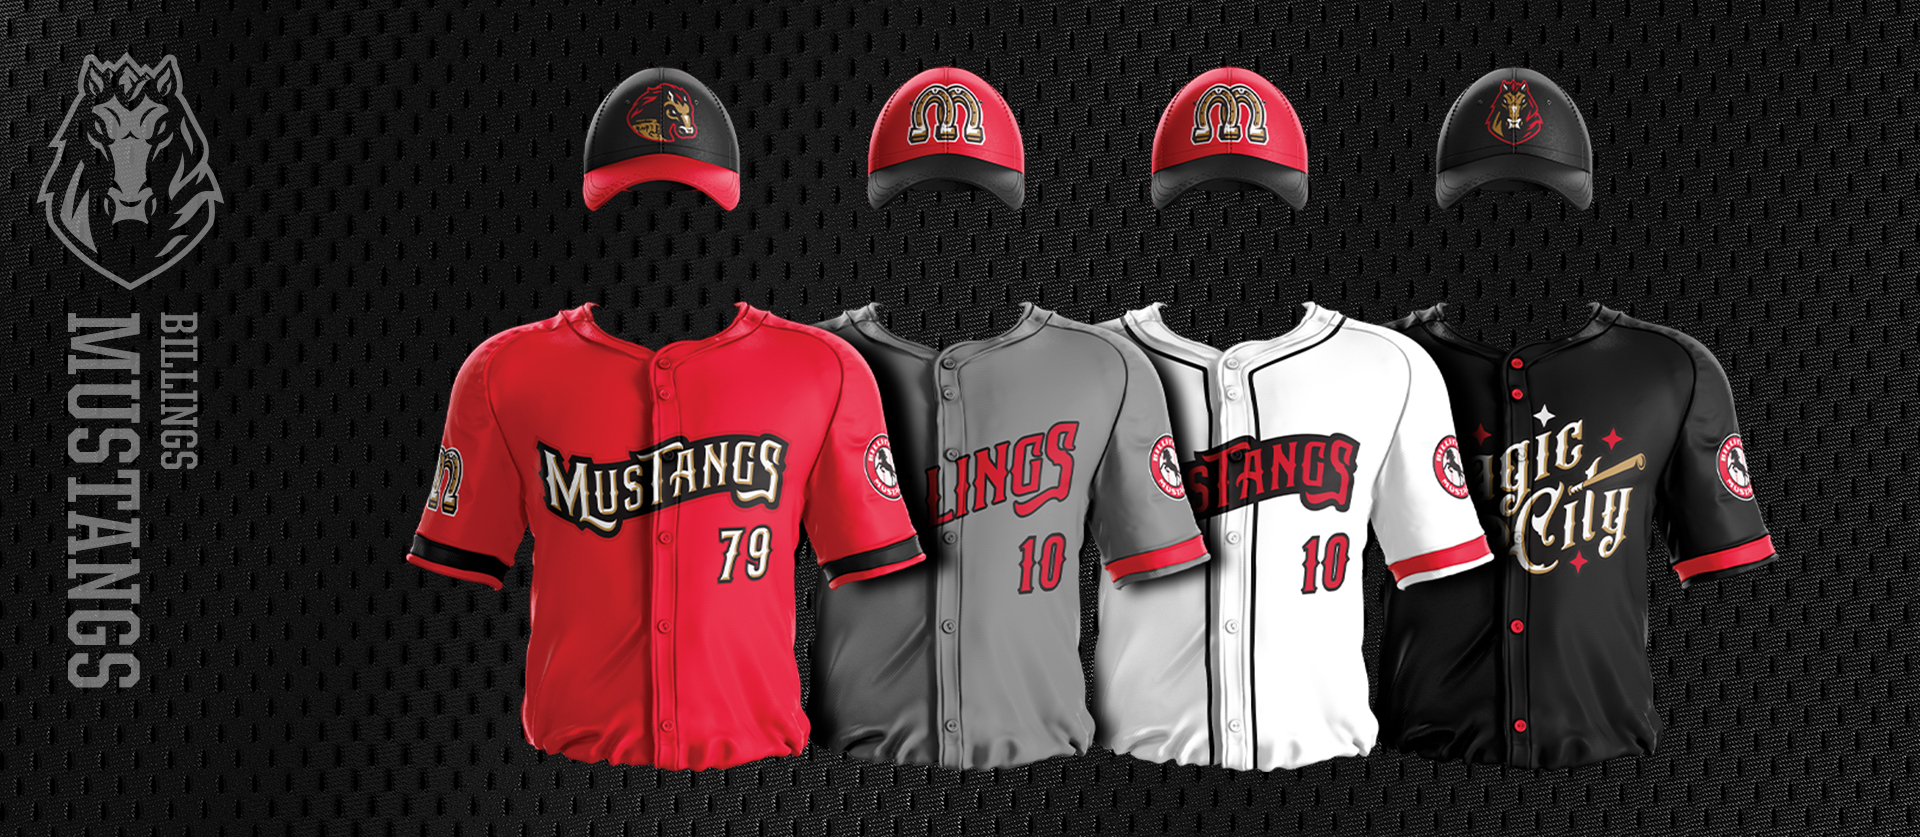 Billings Mustangs Uniform design of the Pioneer Baseball League